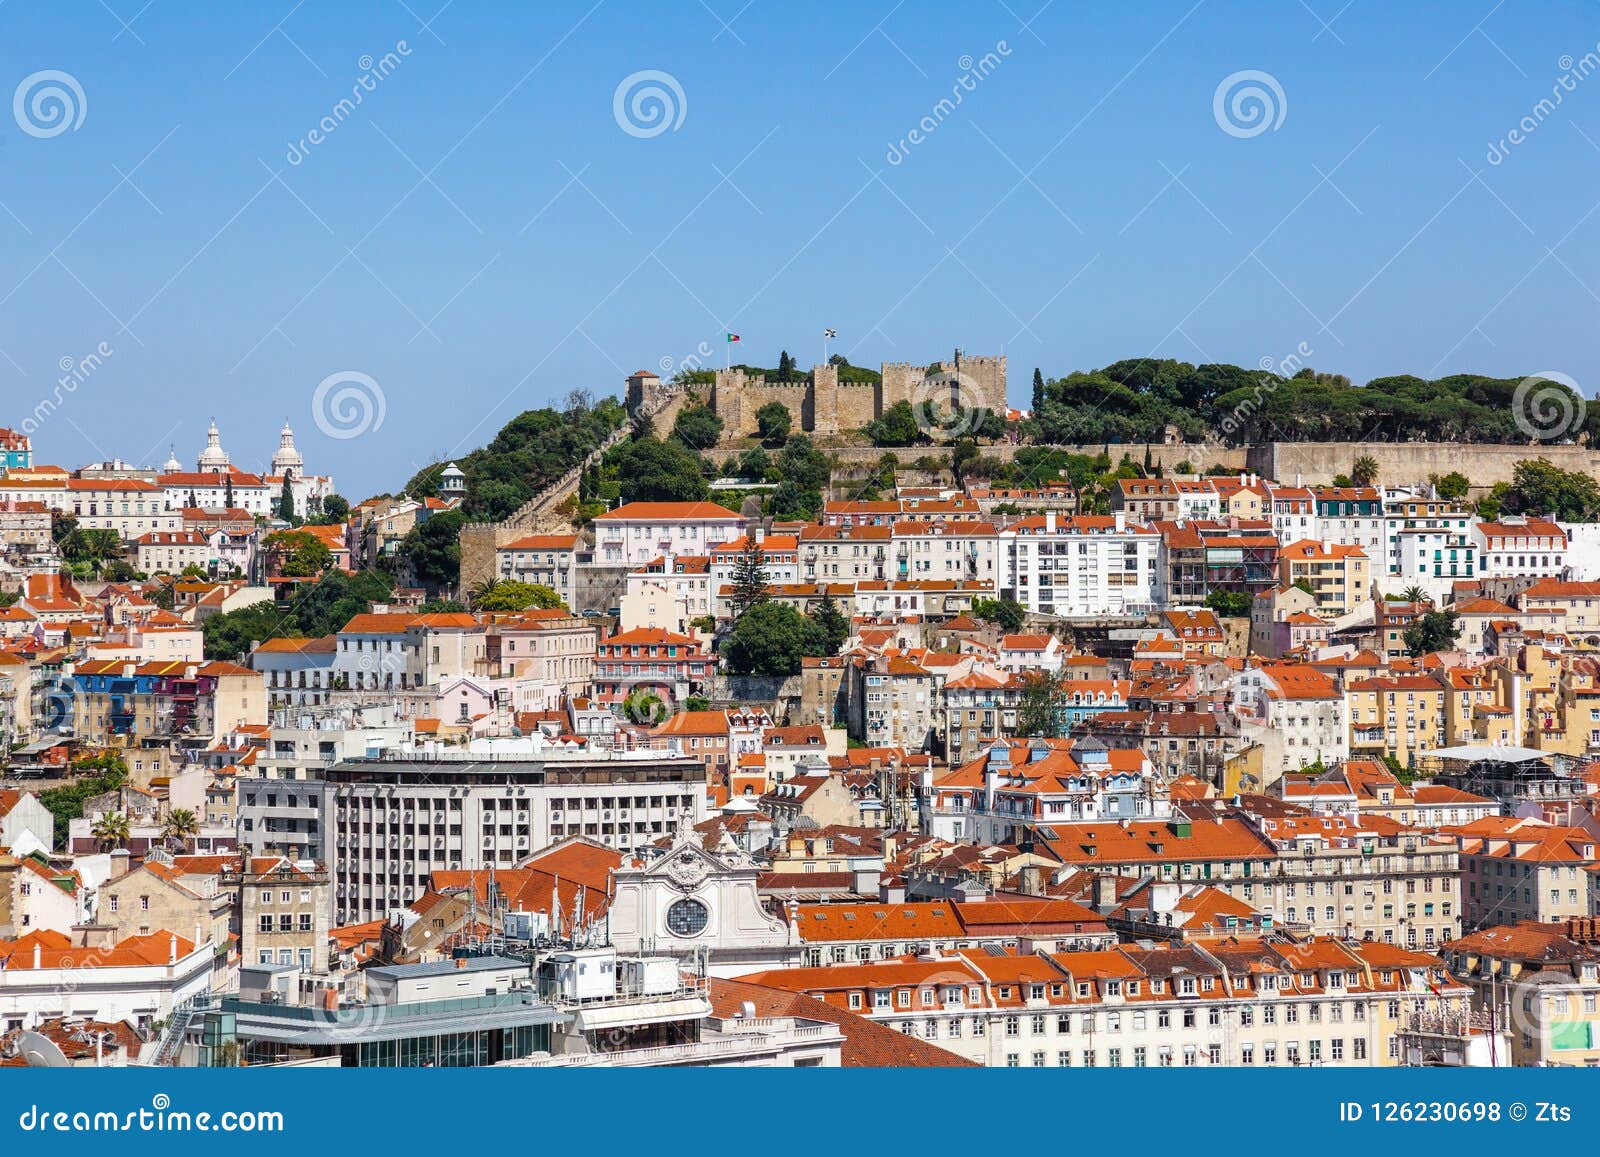 lisbon skyline, portugal. , the baixa, alfama and mouraria districts